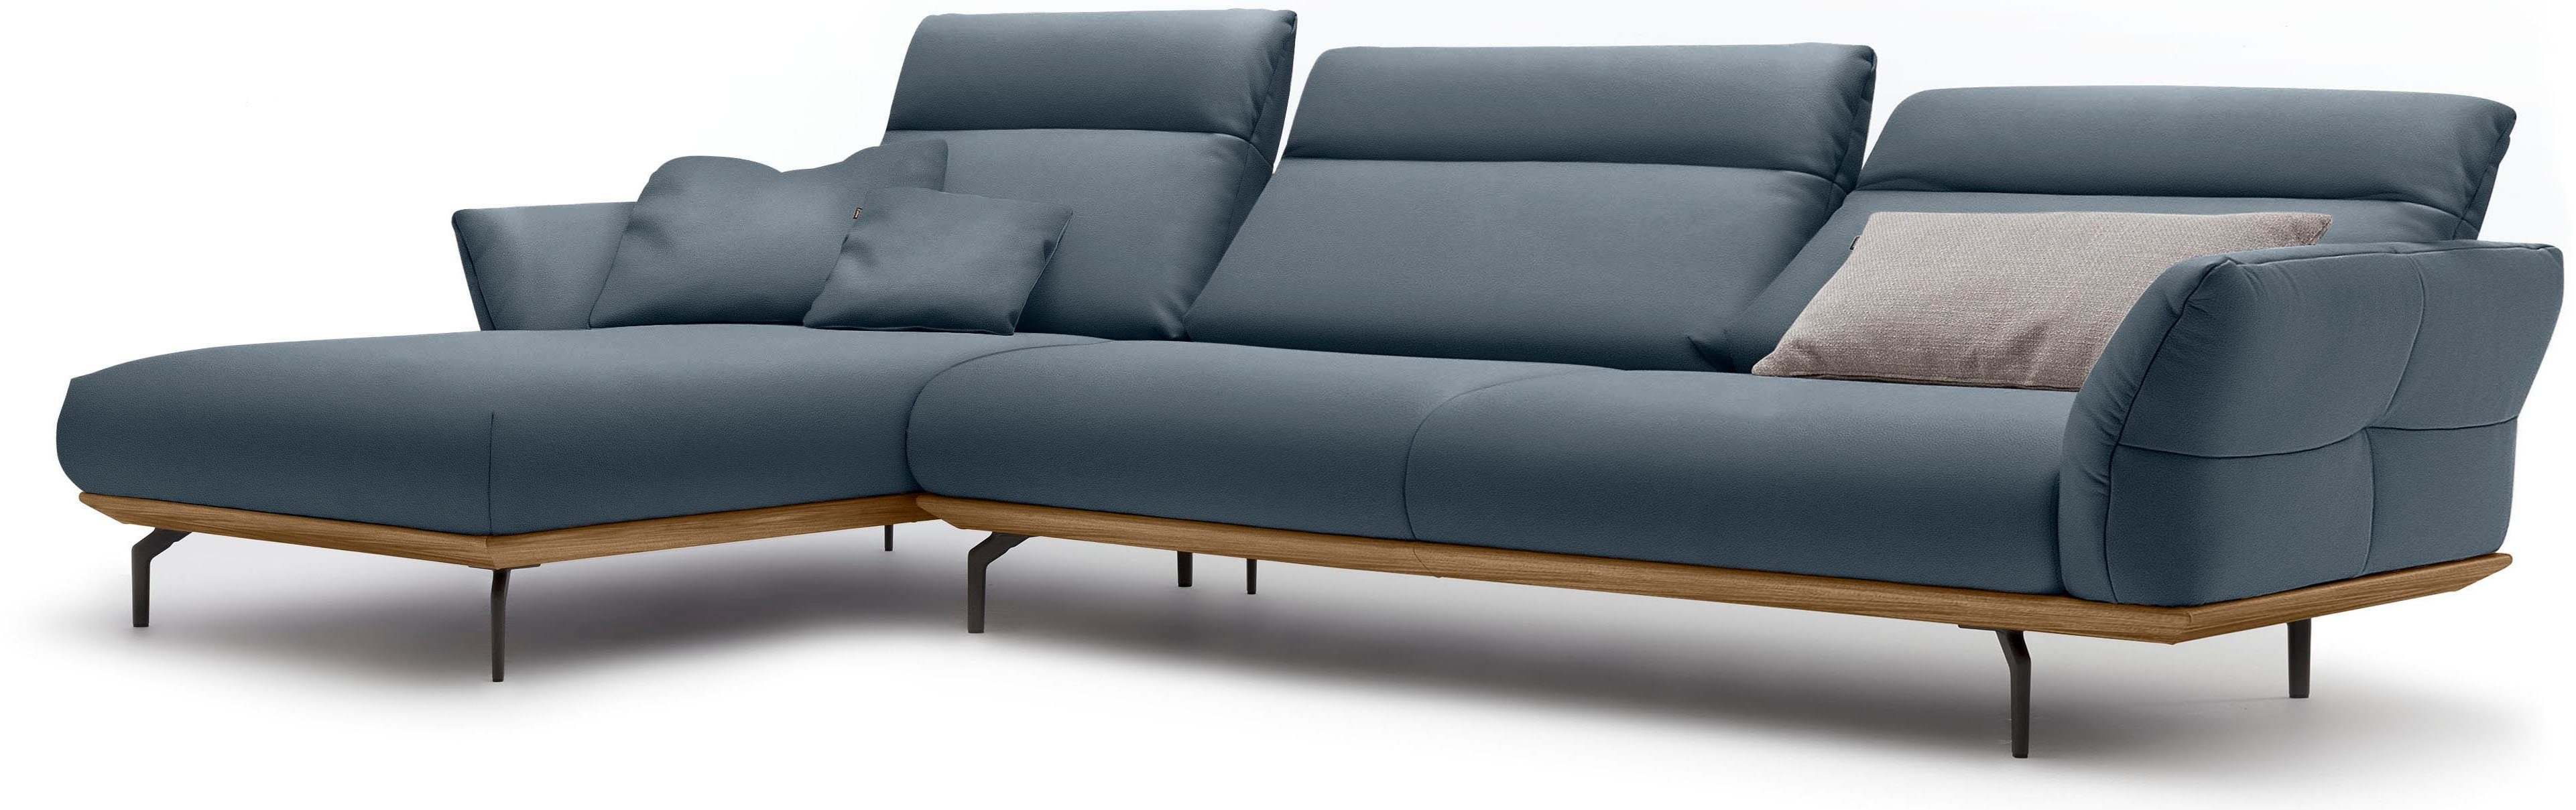 hülsta sofa Ecksofa hs.460, Sockel in in Breite Nussbaum, Umbragrau, cm 338 Winkelfüße